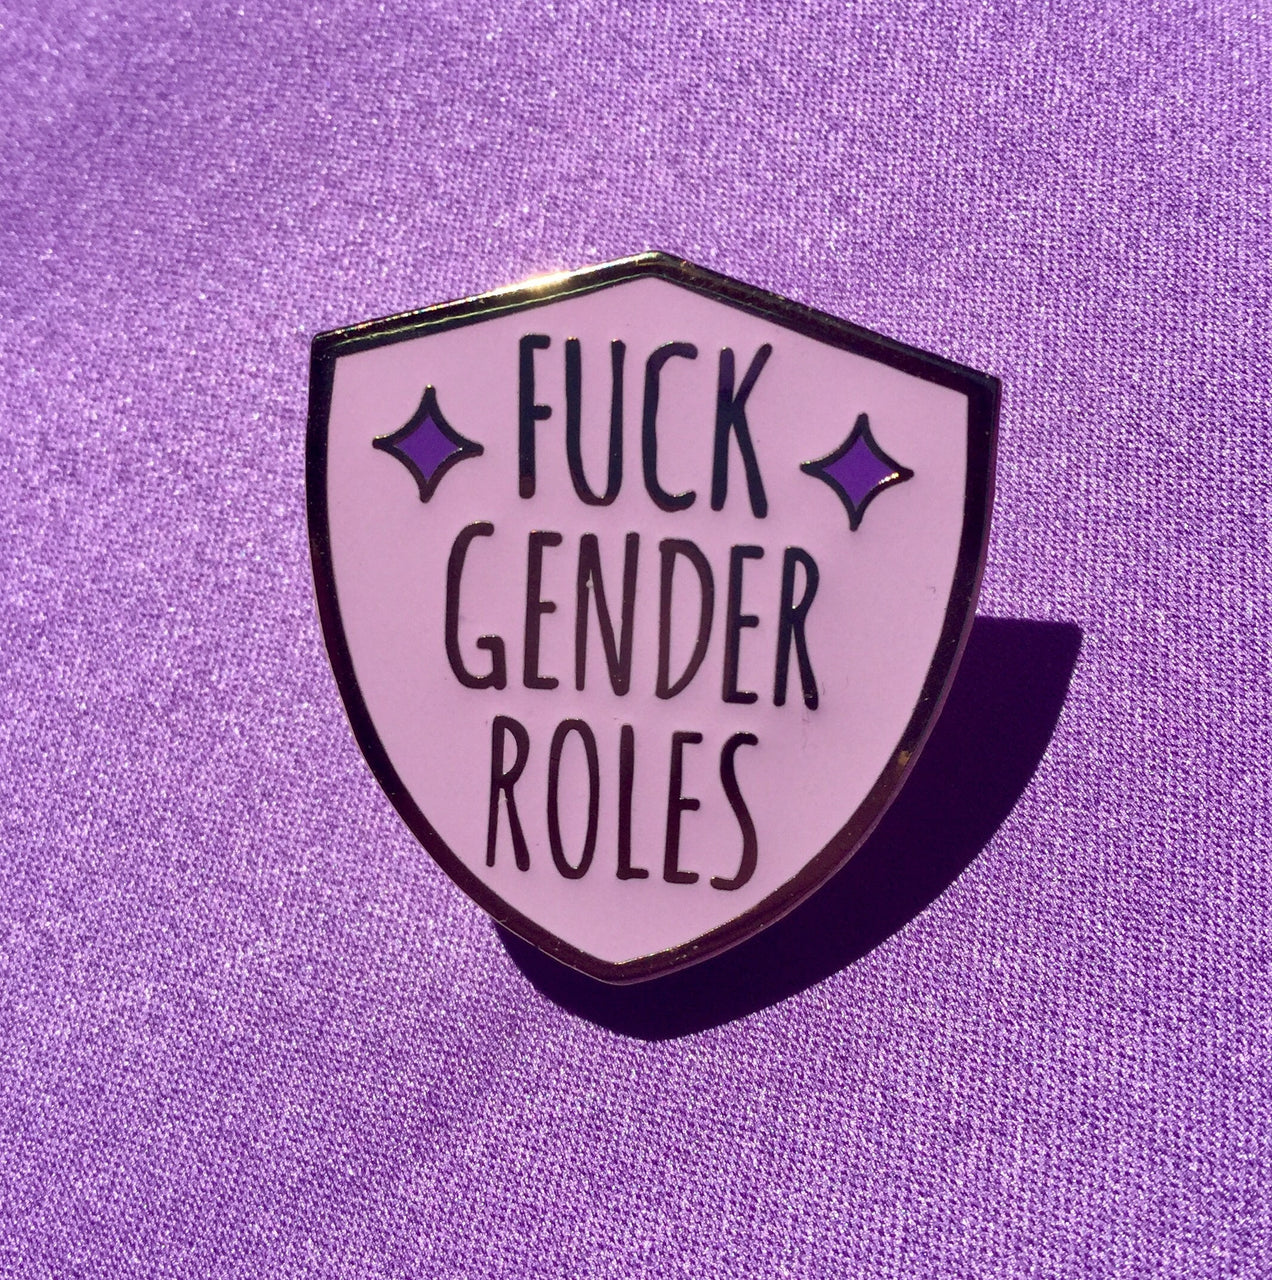 Fuck gender roles enamel pin - Radical Buttons